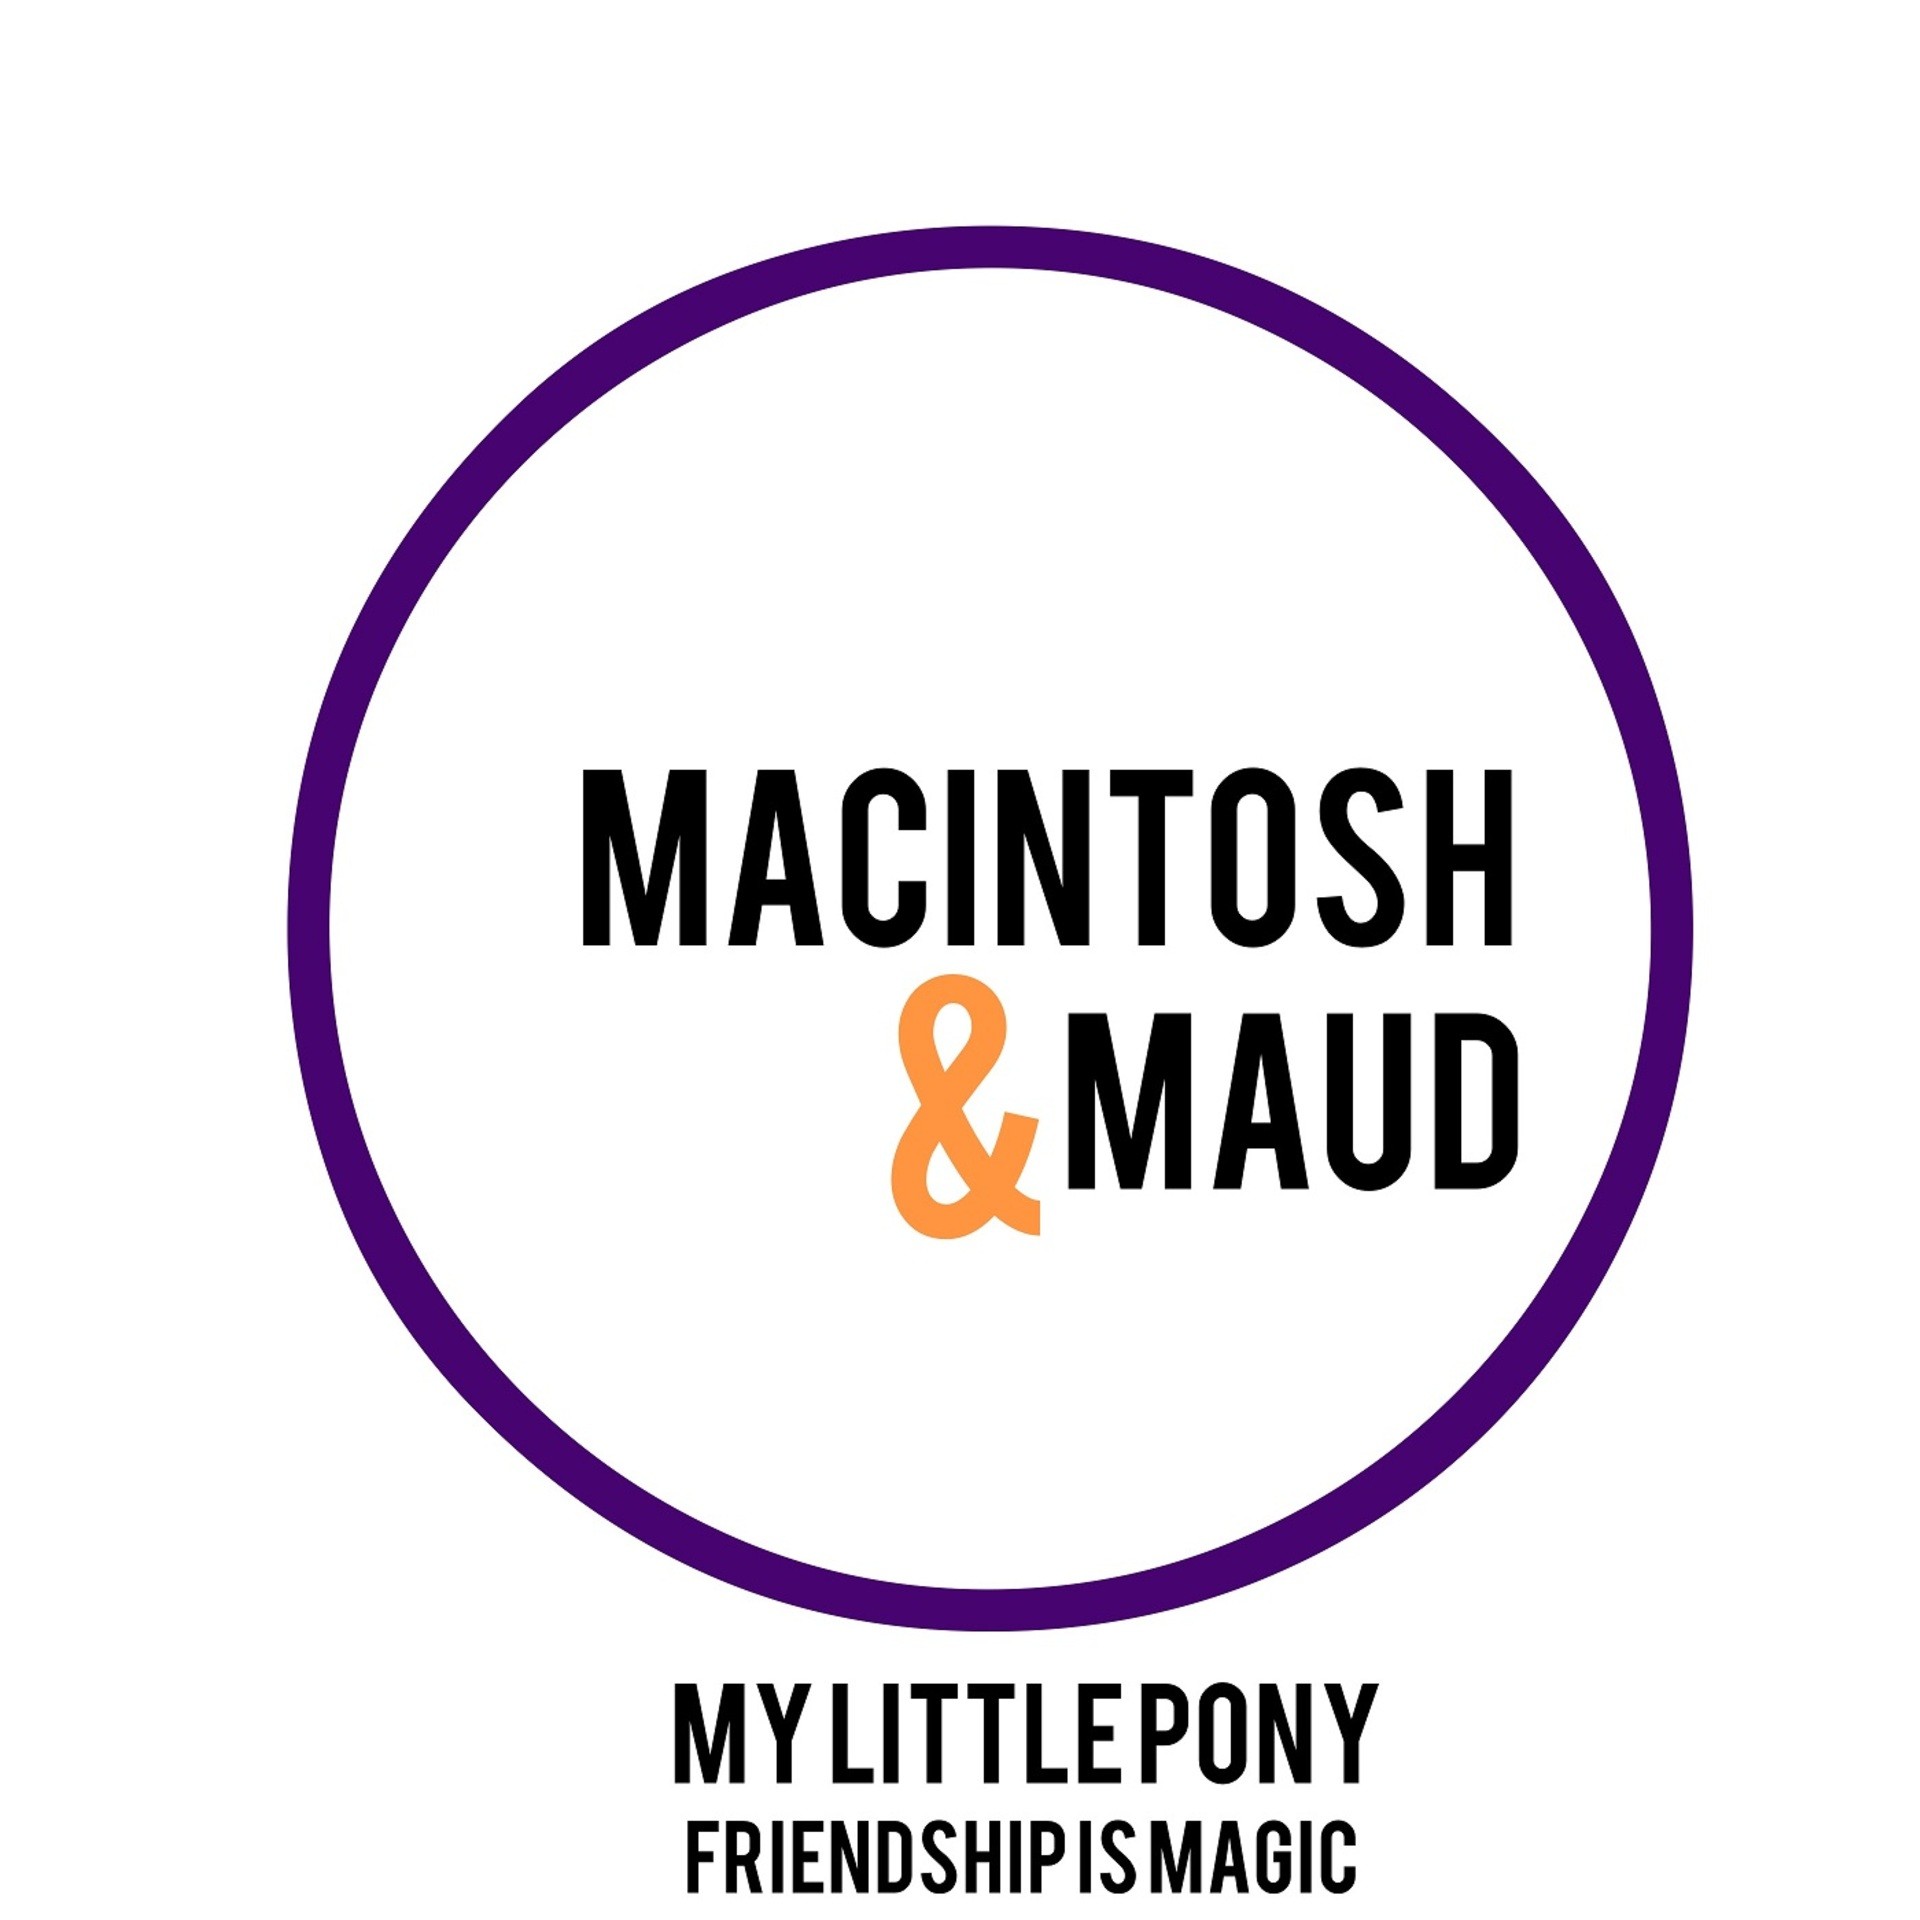 Macintosh & Maud: A My Little Pony Podcast podcast show image